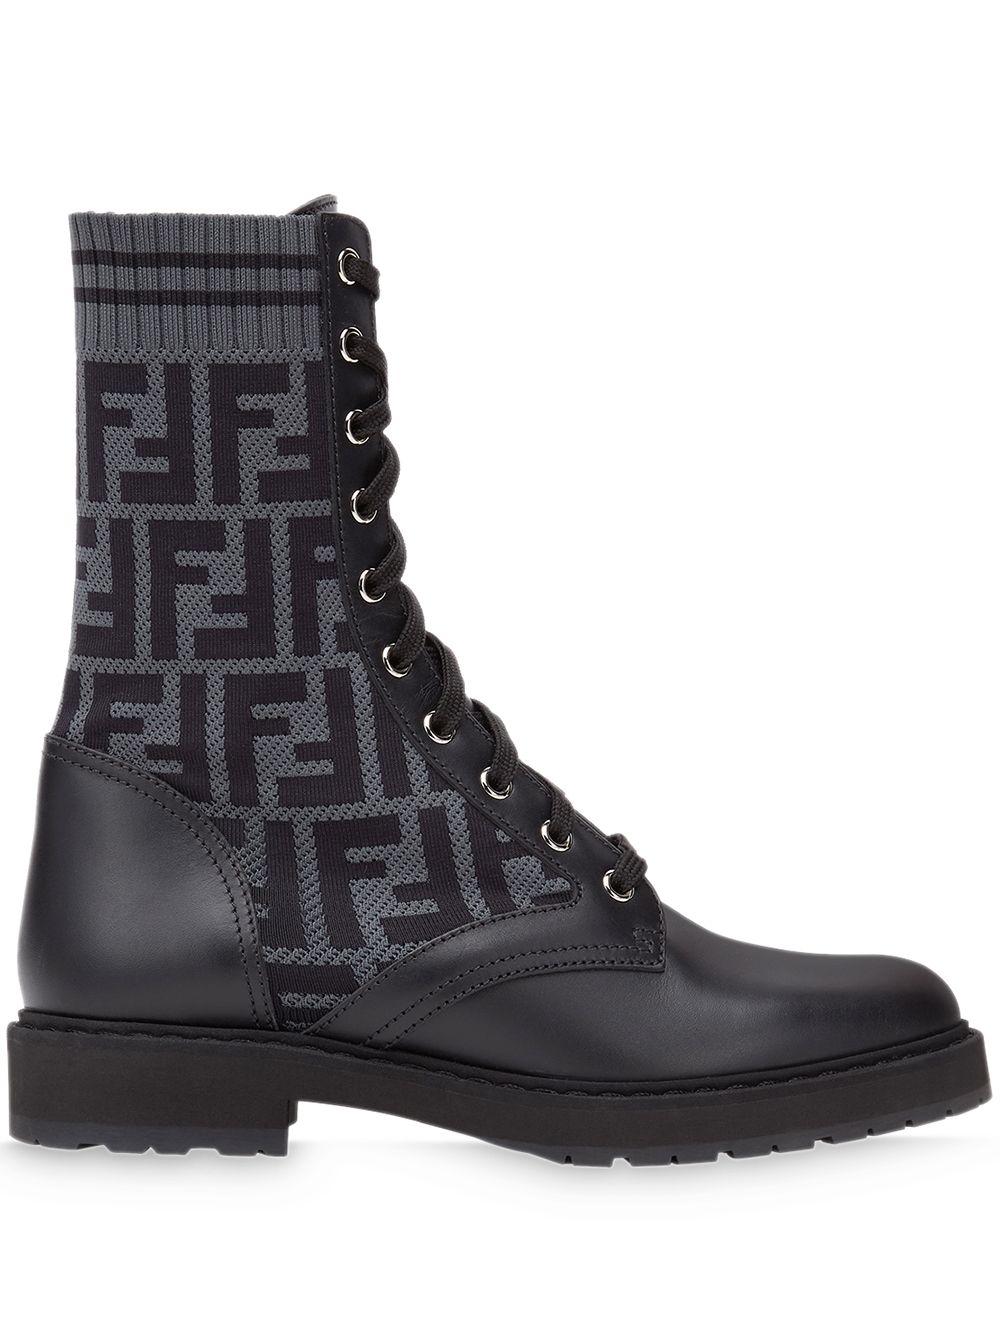 Fendi Leather Rockoko Ff Combat Boots in Black - Lyst